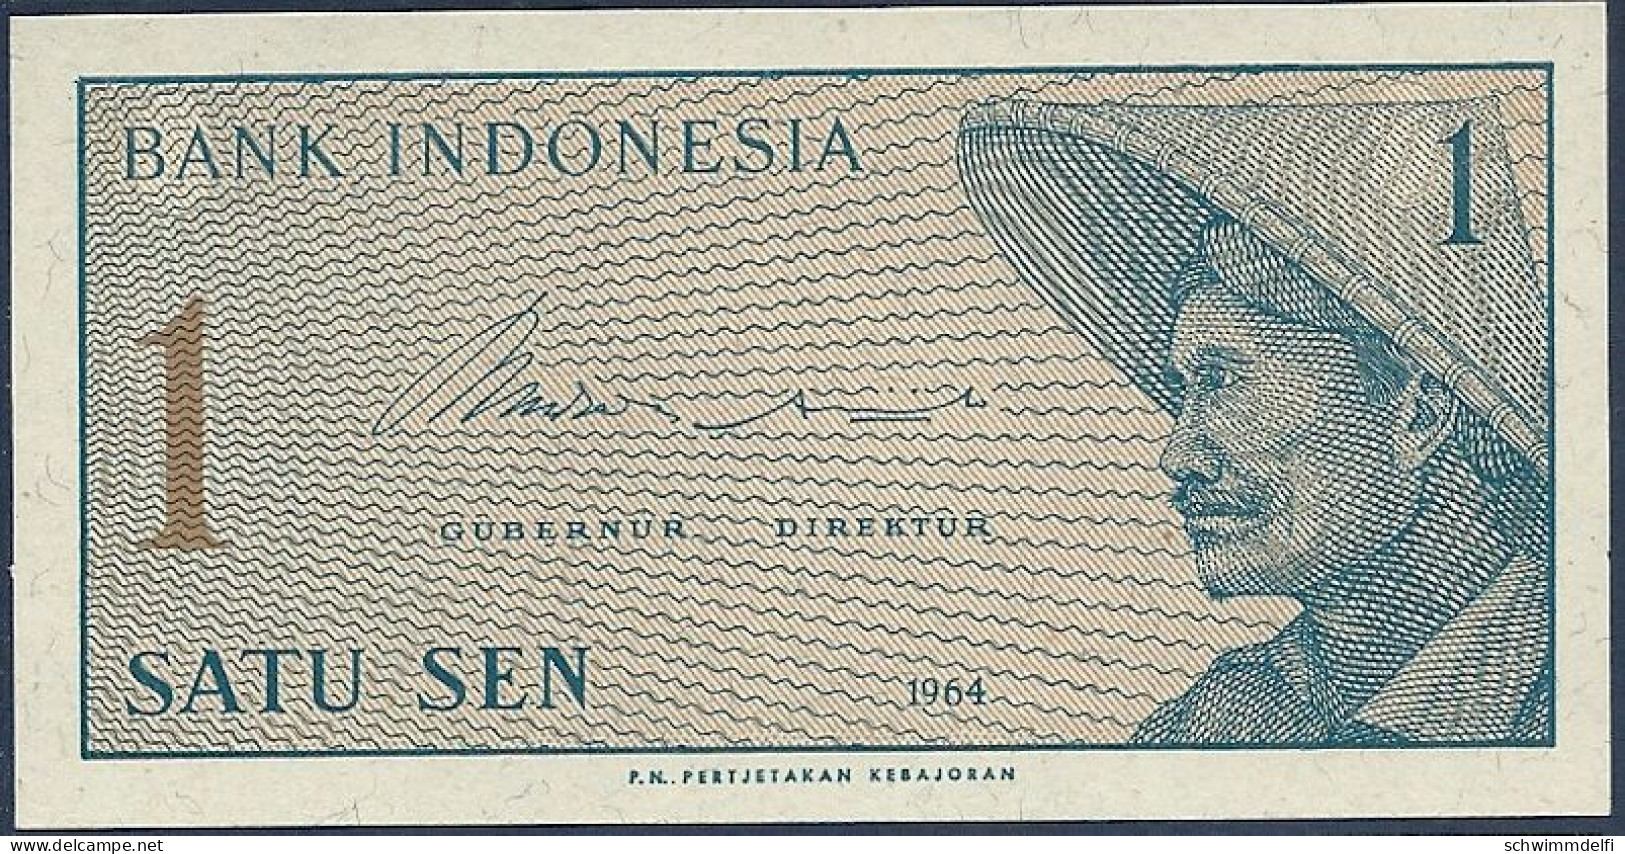 INDONESIEN - INDONESIA - 1 SEN - 50 SEN 1964 - SIN CIRCULAR - UNZ. - UNC. - Indonésie